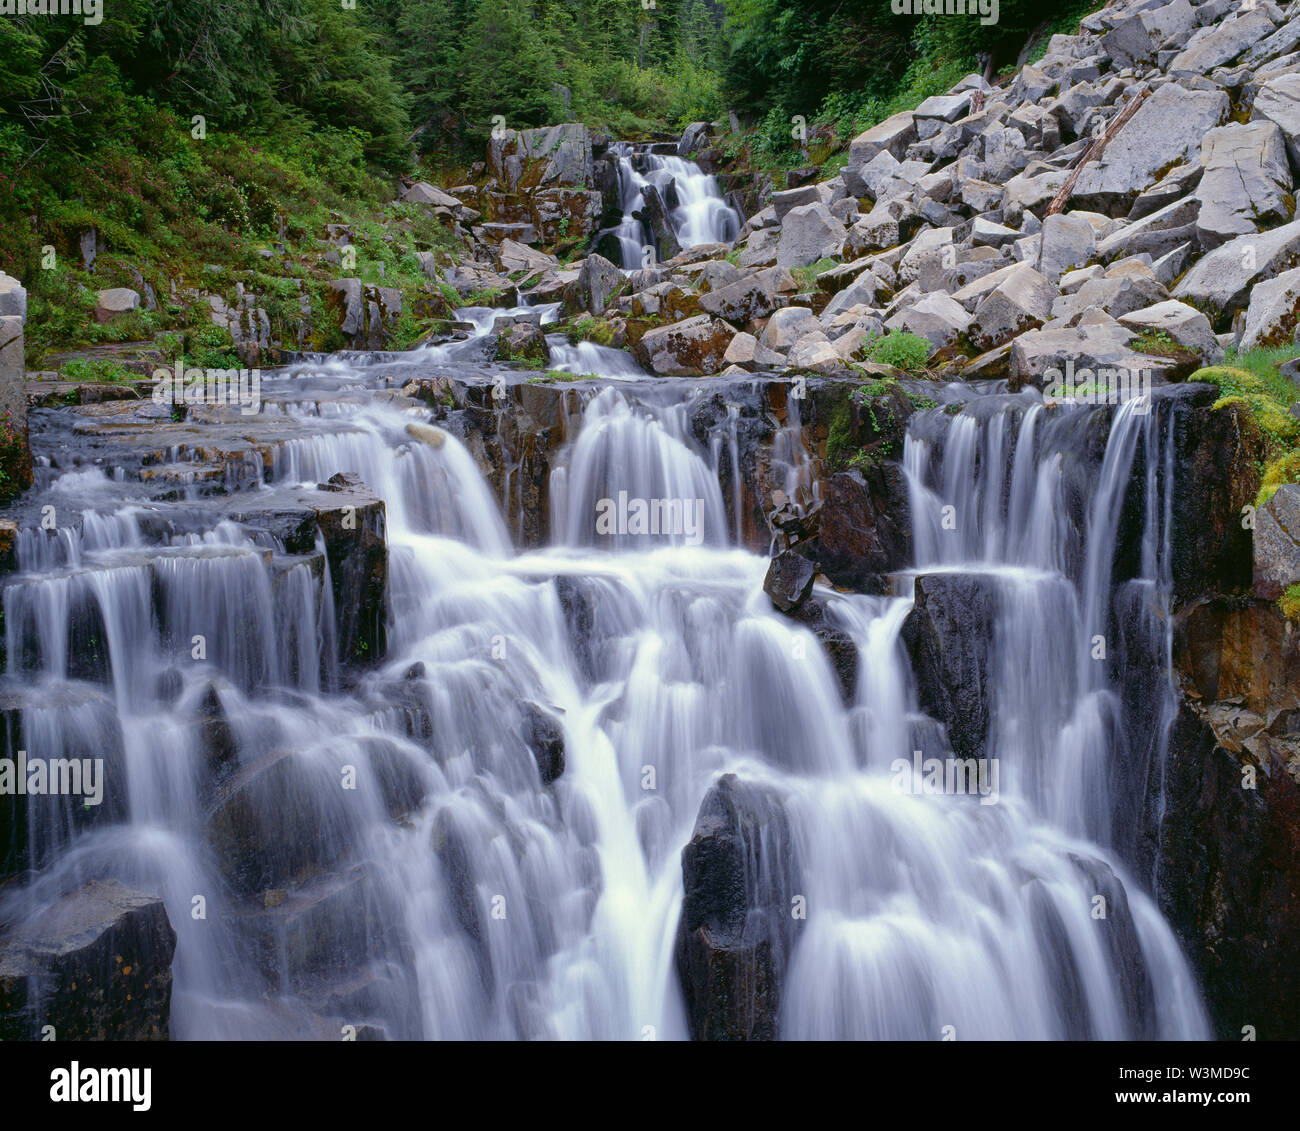 USA, Washington, Mt. Rainier National Park, Waterfall on Sunbeam Creek descends over irregular rocks. Stock Photo